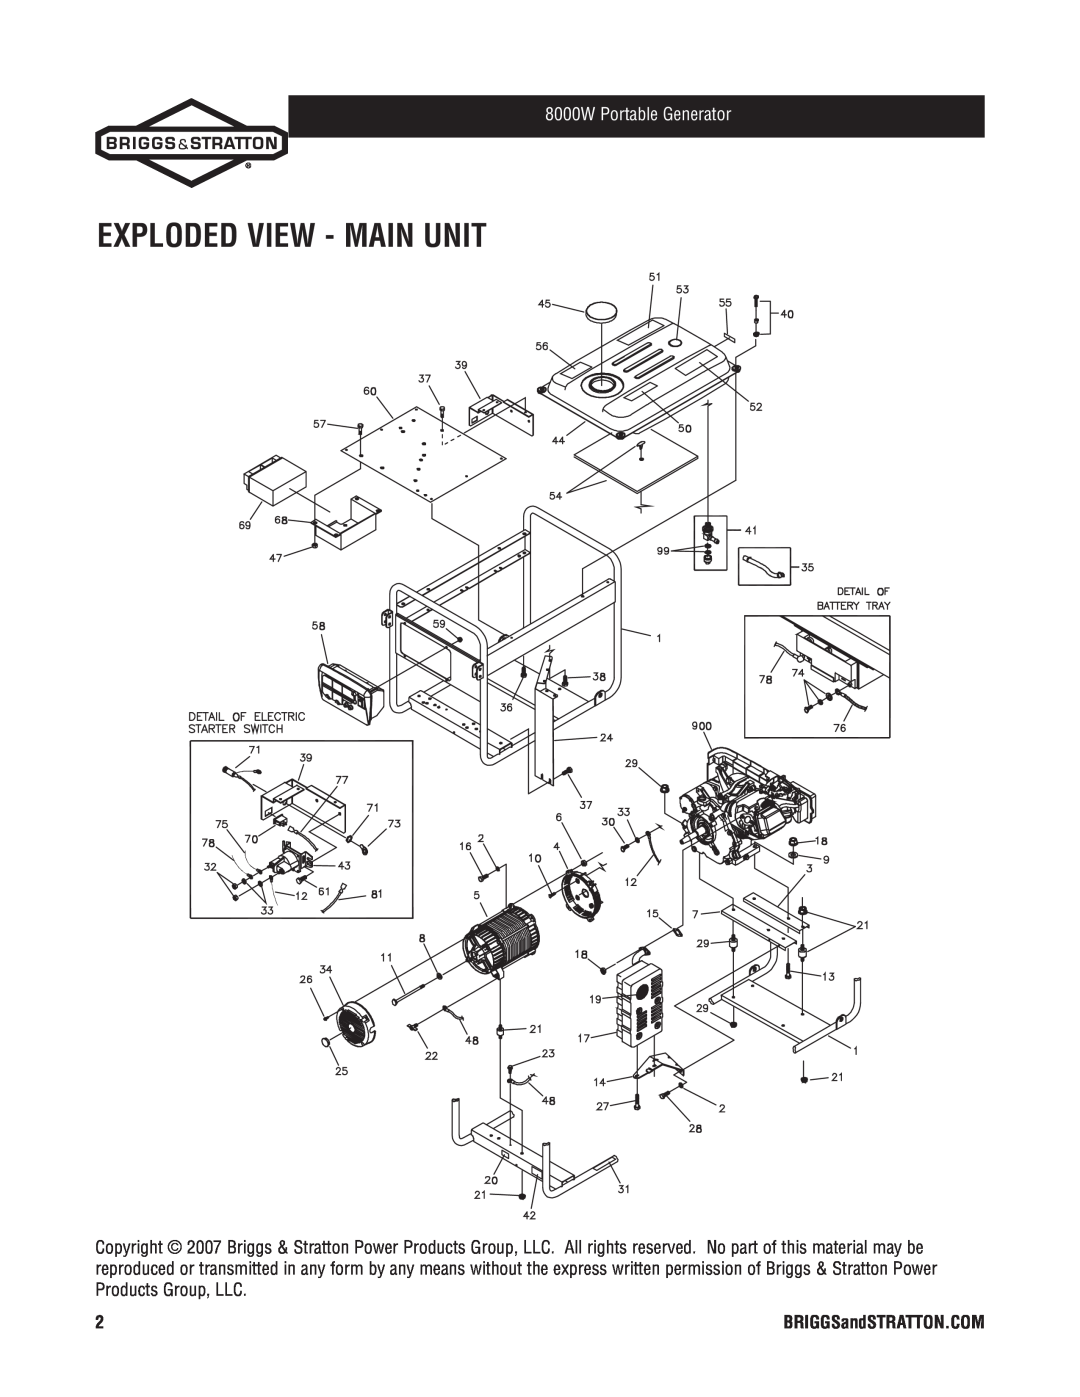 Briggs & Stratton 30334 manual Exploded View - Main Unit, 8000W Portable Generator, BRIGGSandSTRATTON.COM 